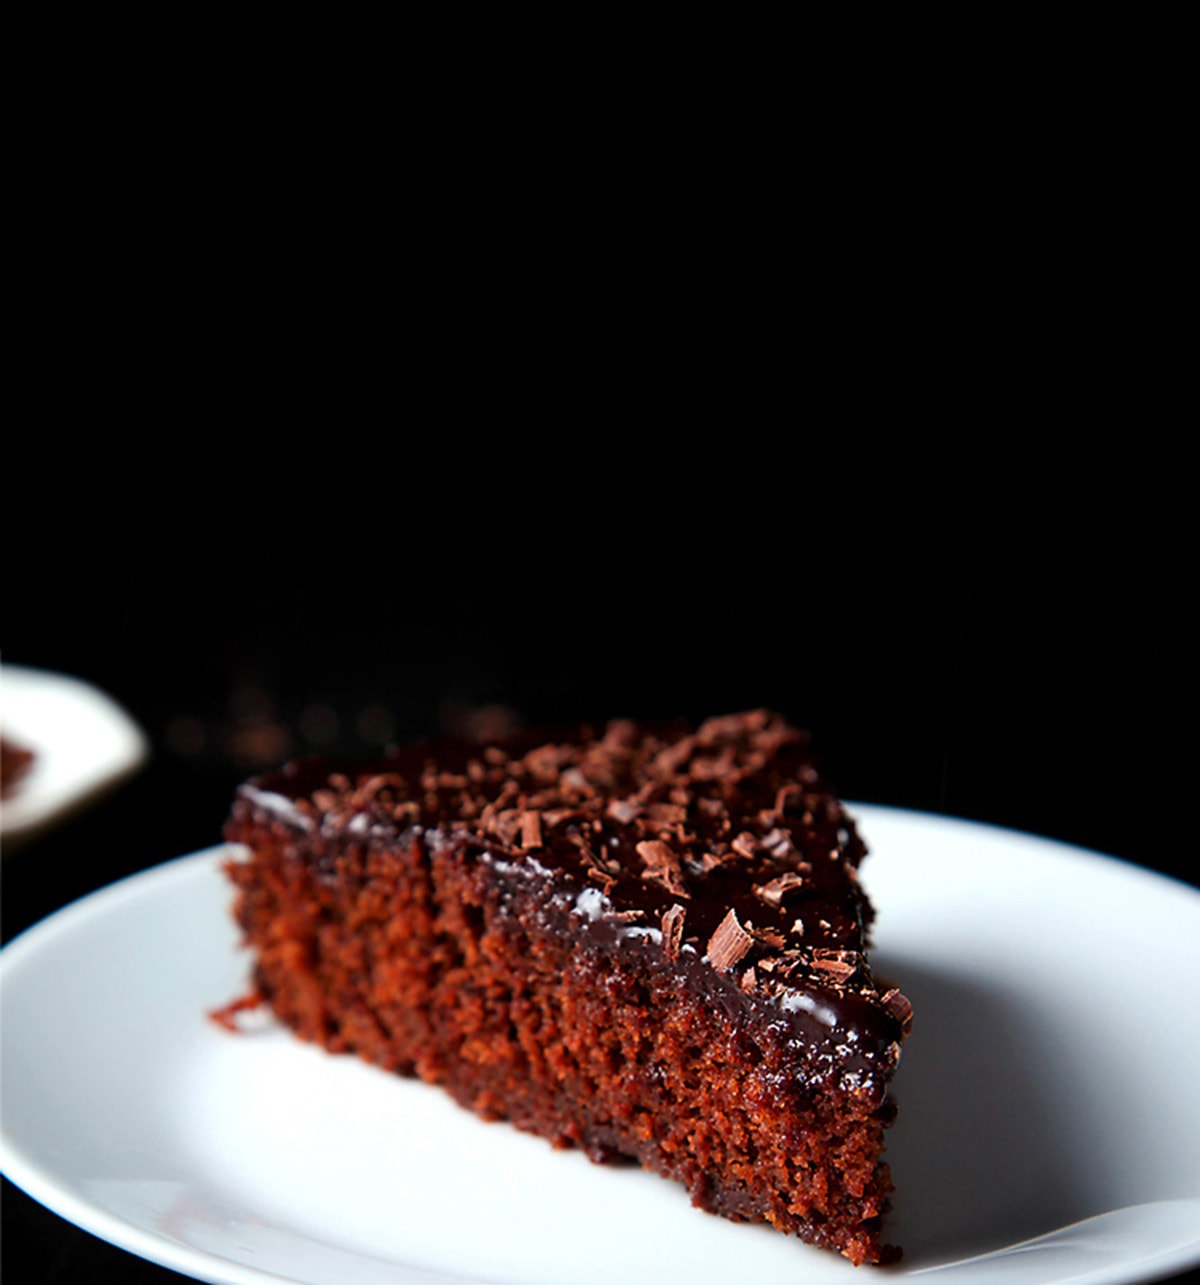 https://www.vegrecipesofindia.com/wp-content/uploads/2021/04/eggless-chocolate-cake-1.jpg